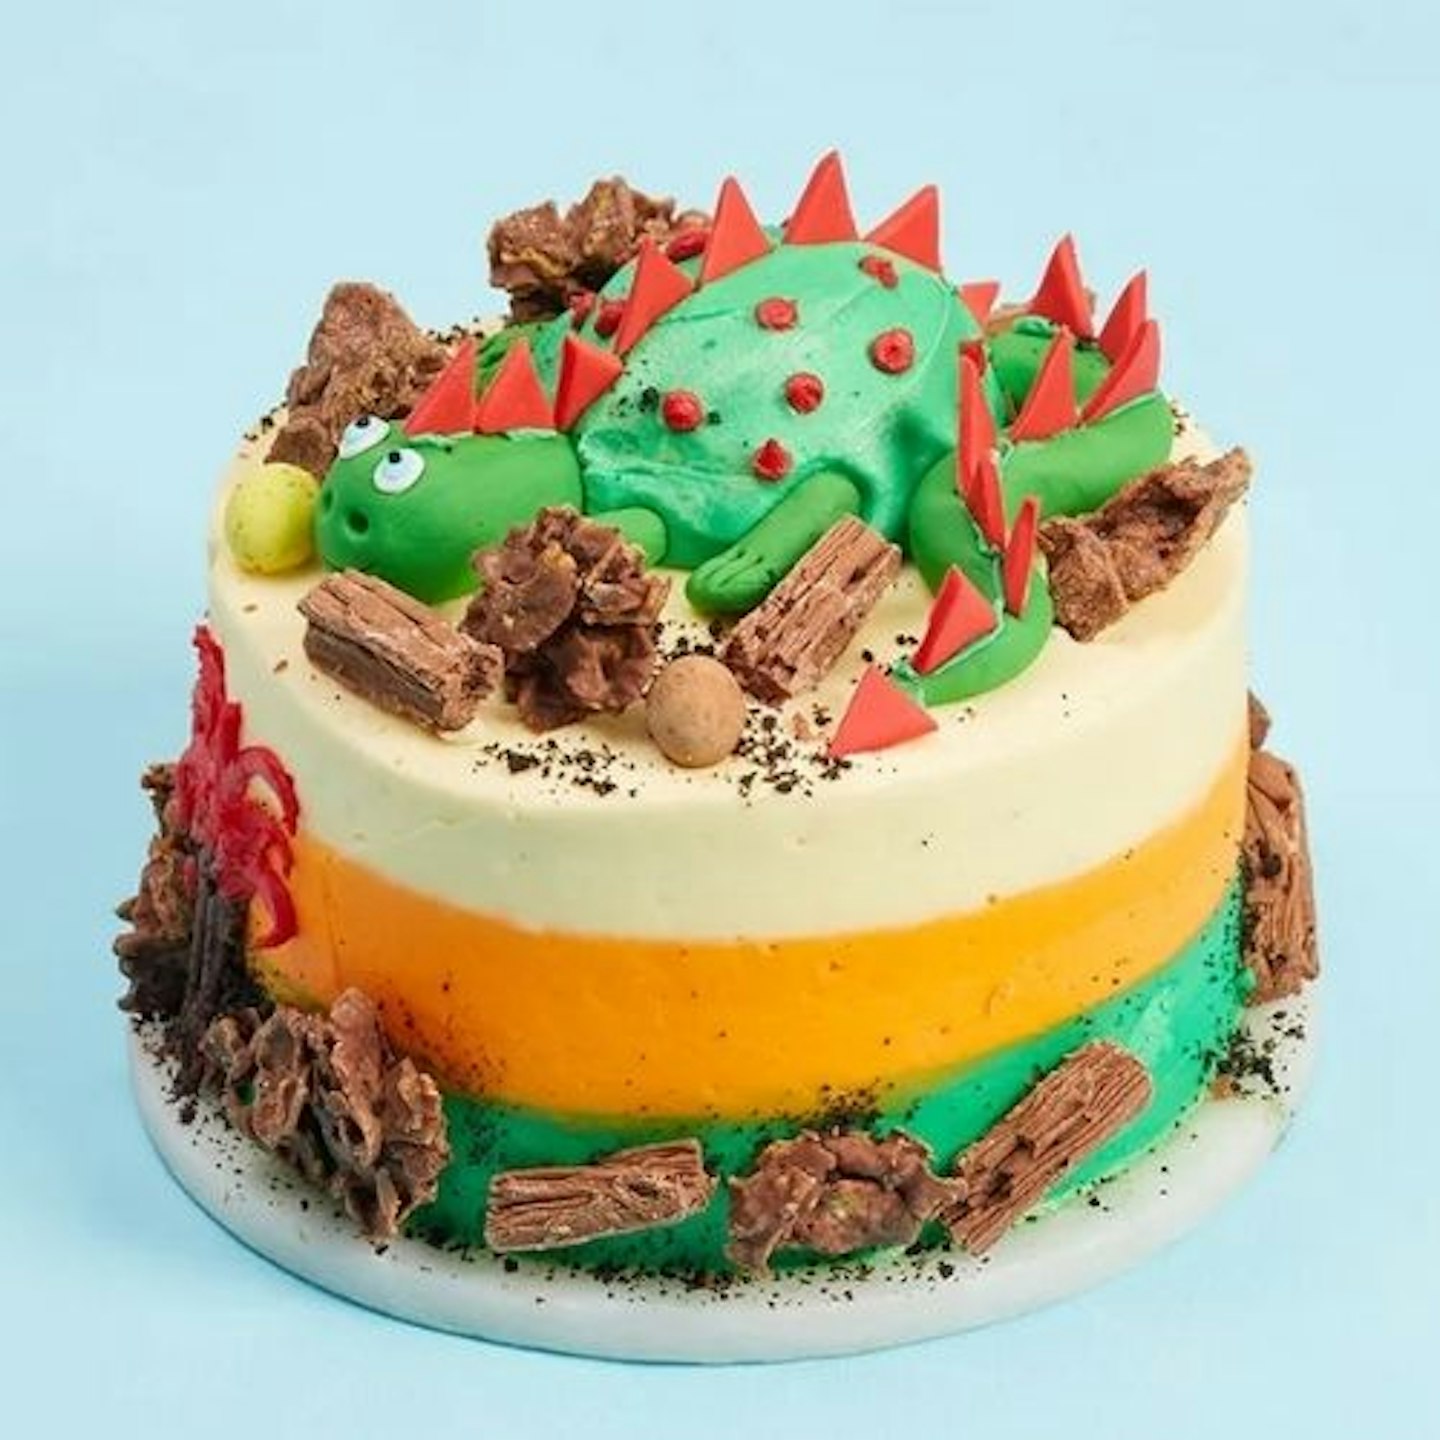 Green Dinosaur Cake